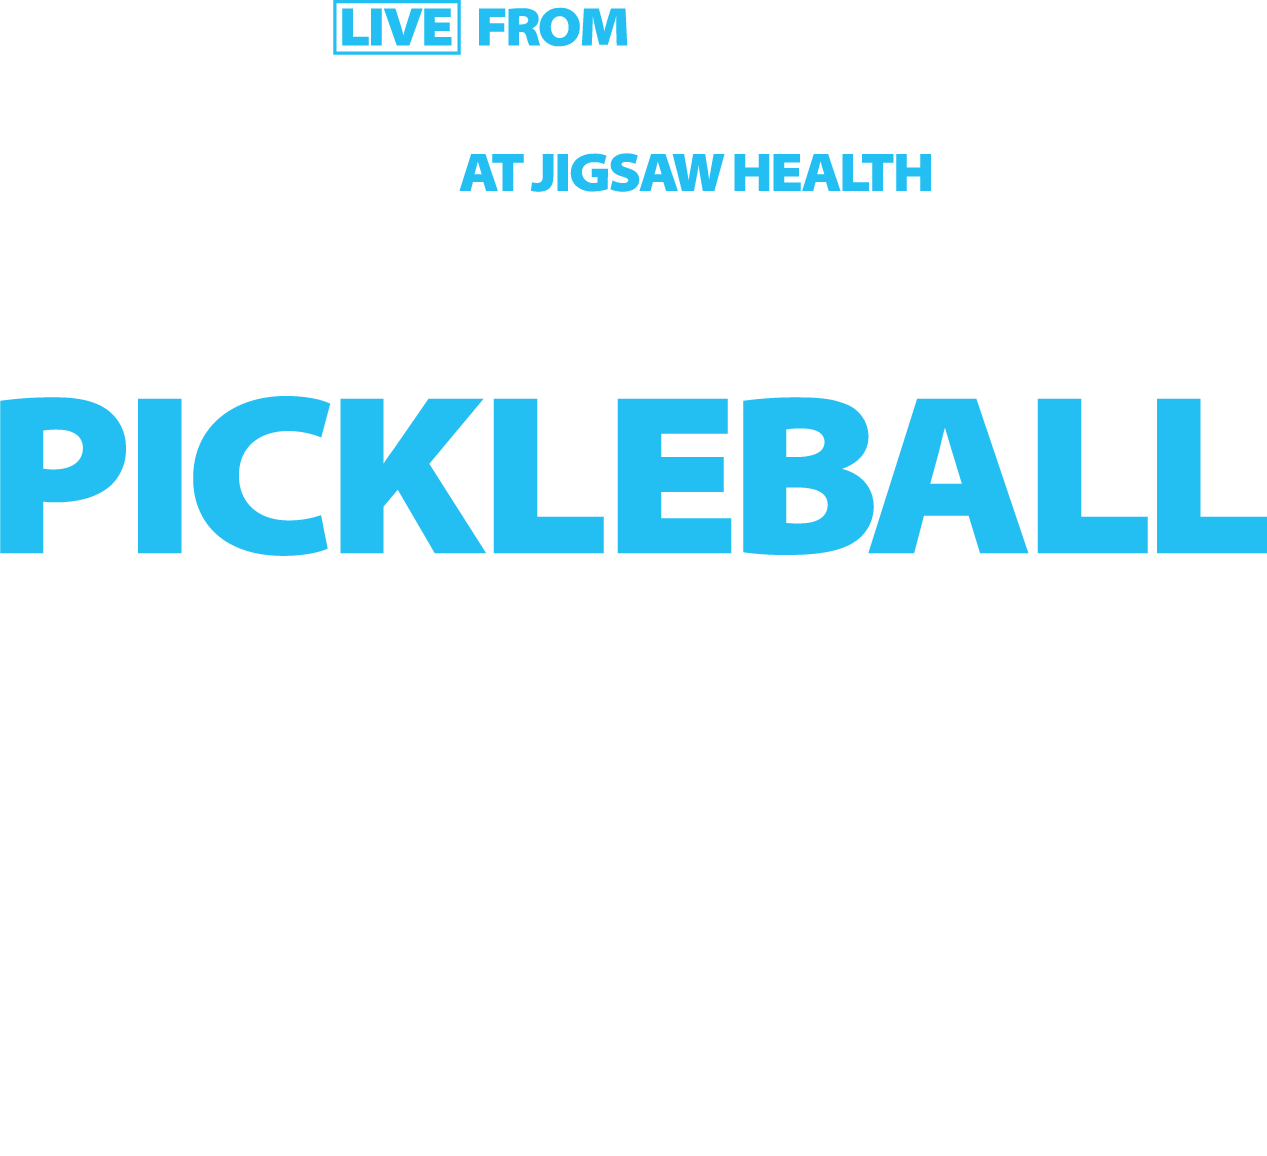 Arizona Pickleball League